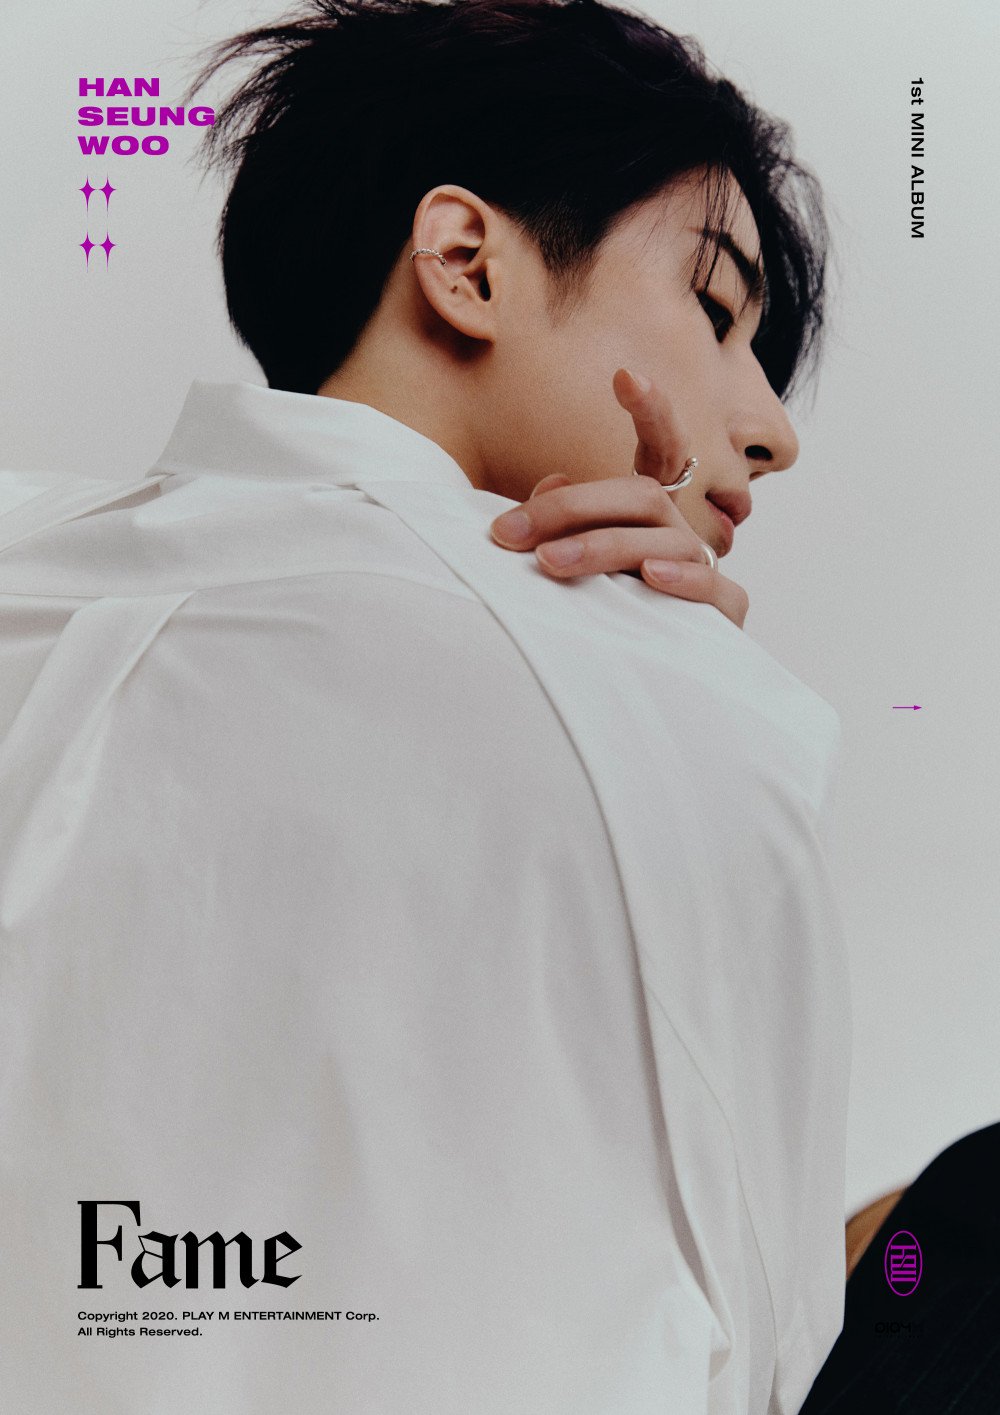 victon-seungwoo-black-white-teaser-images-solo-mini-album-fame-1